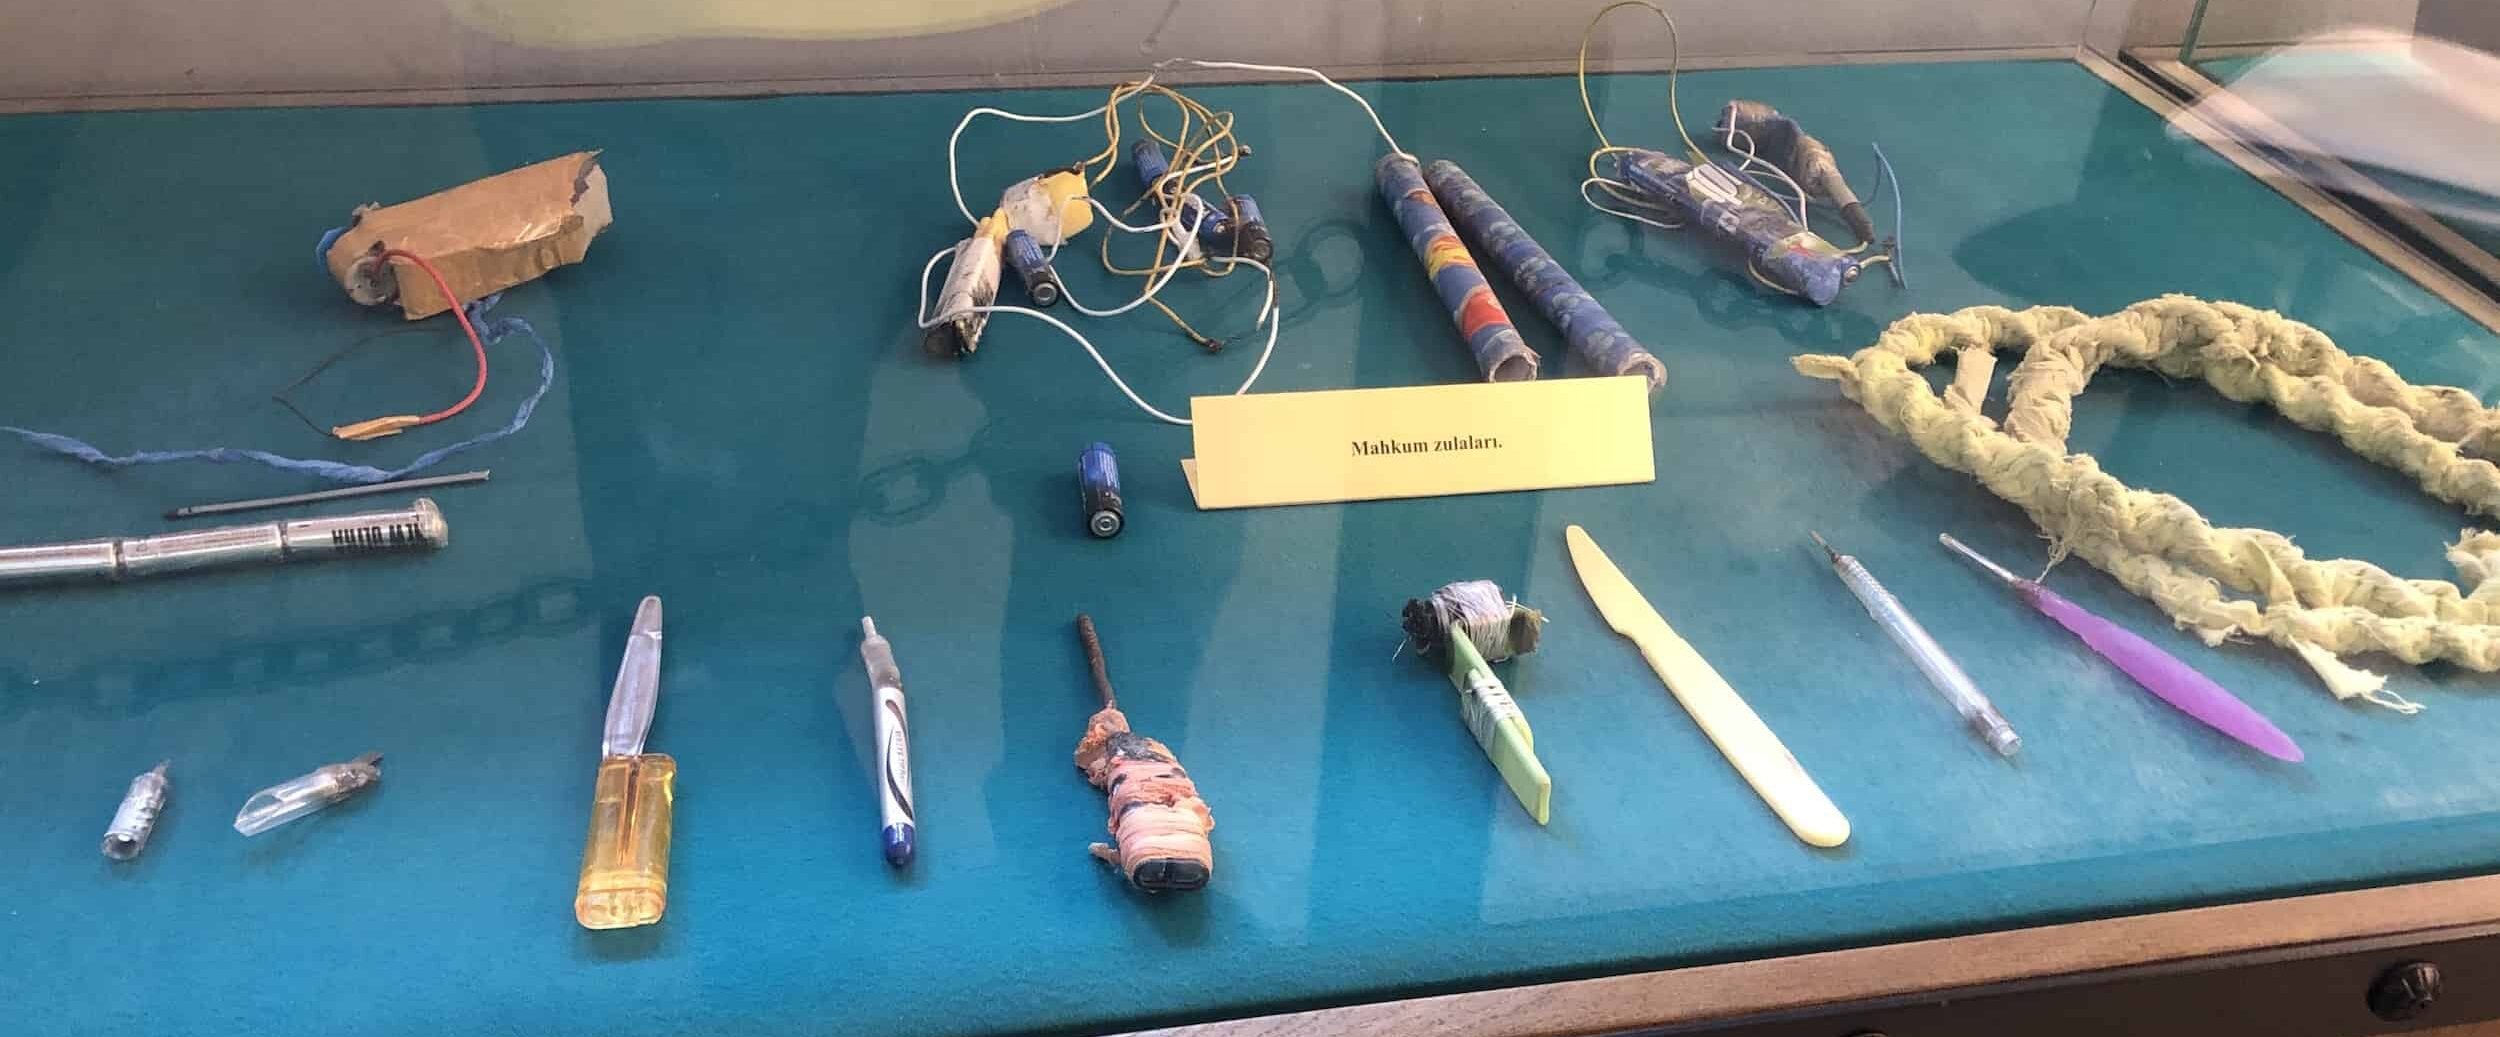 Homemade weapons in the 2nd Ward at Ulucanlar Prison in Ankara, Turkey